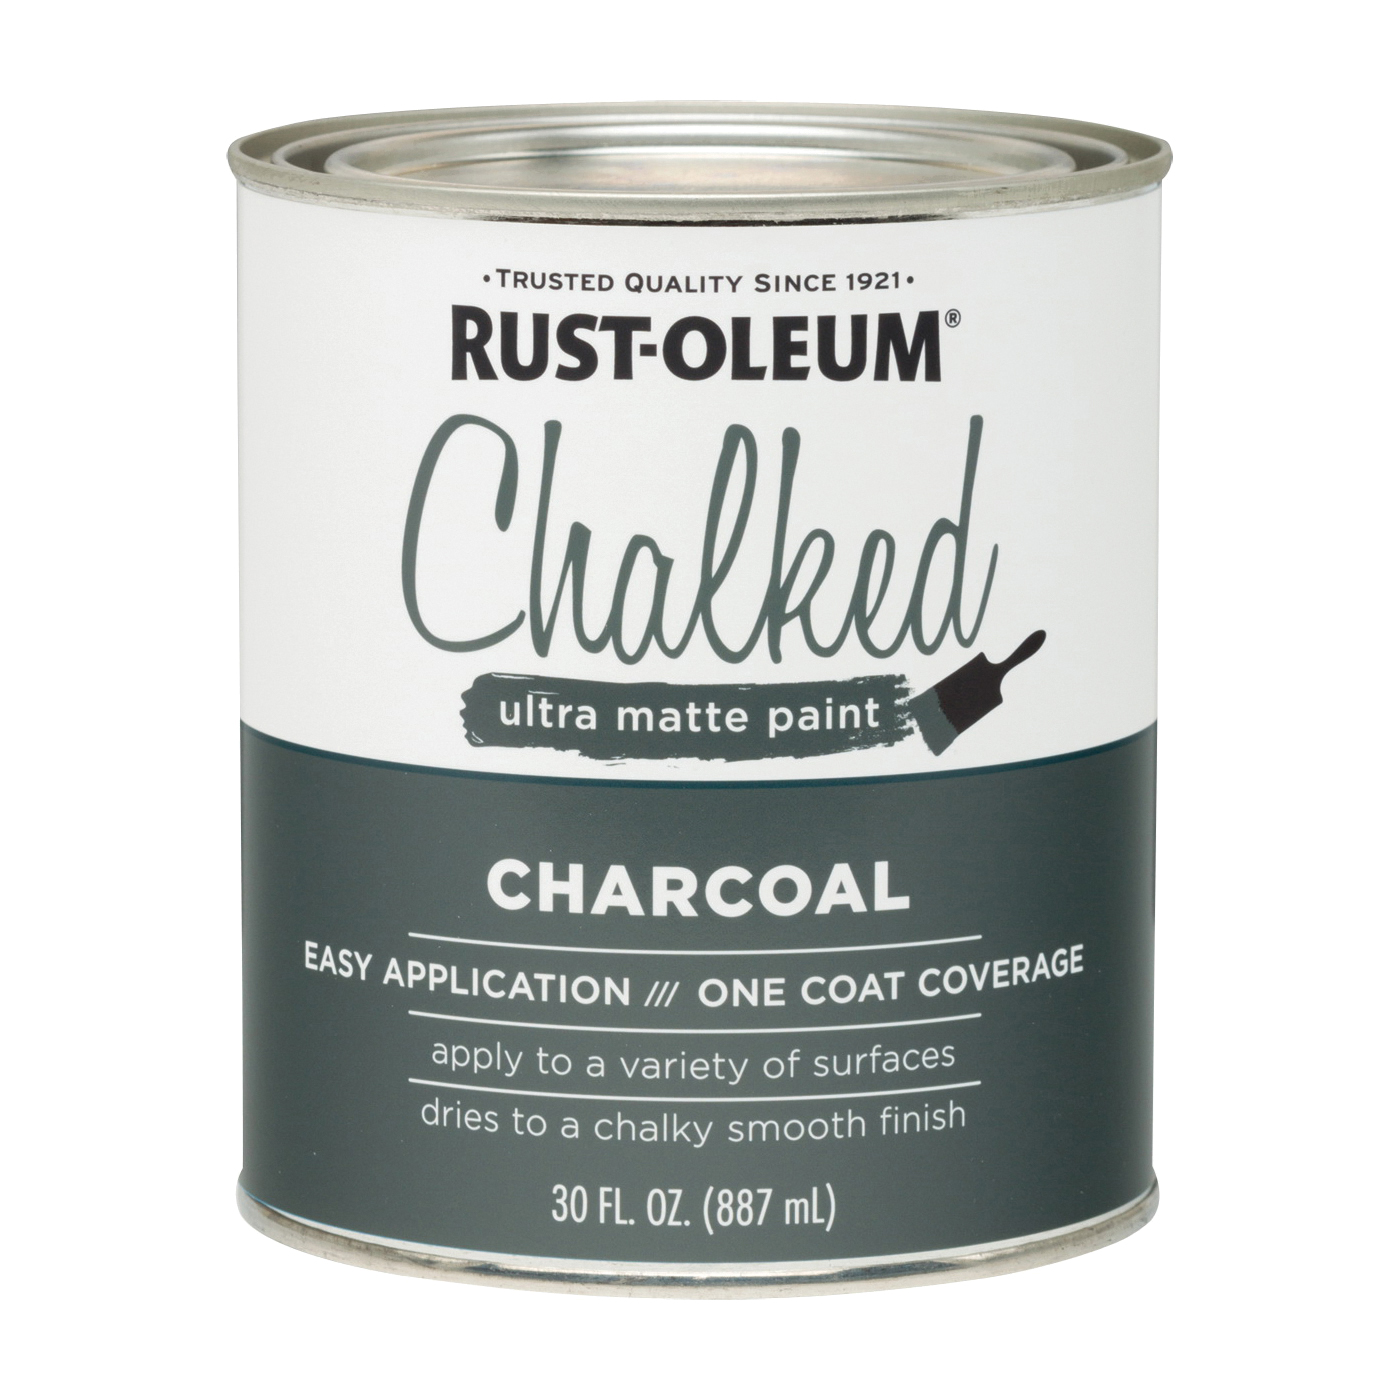 RUST-OLEUM 285144 Chalk Paint, Ultra Matte, Charcoal, 30 oz - 2